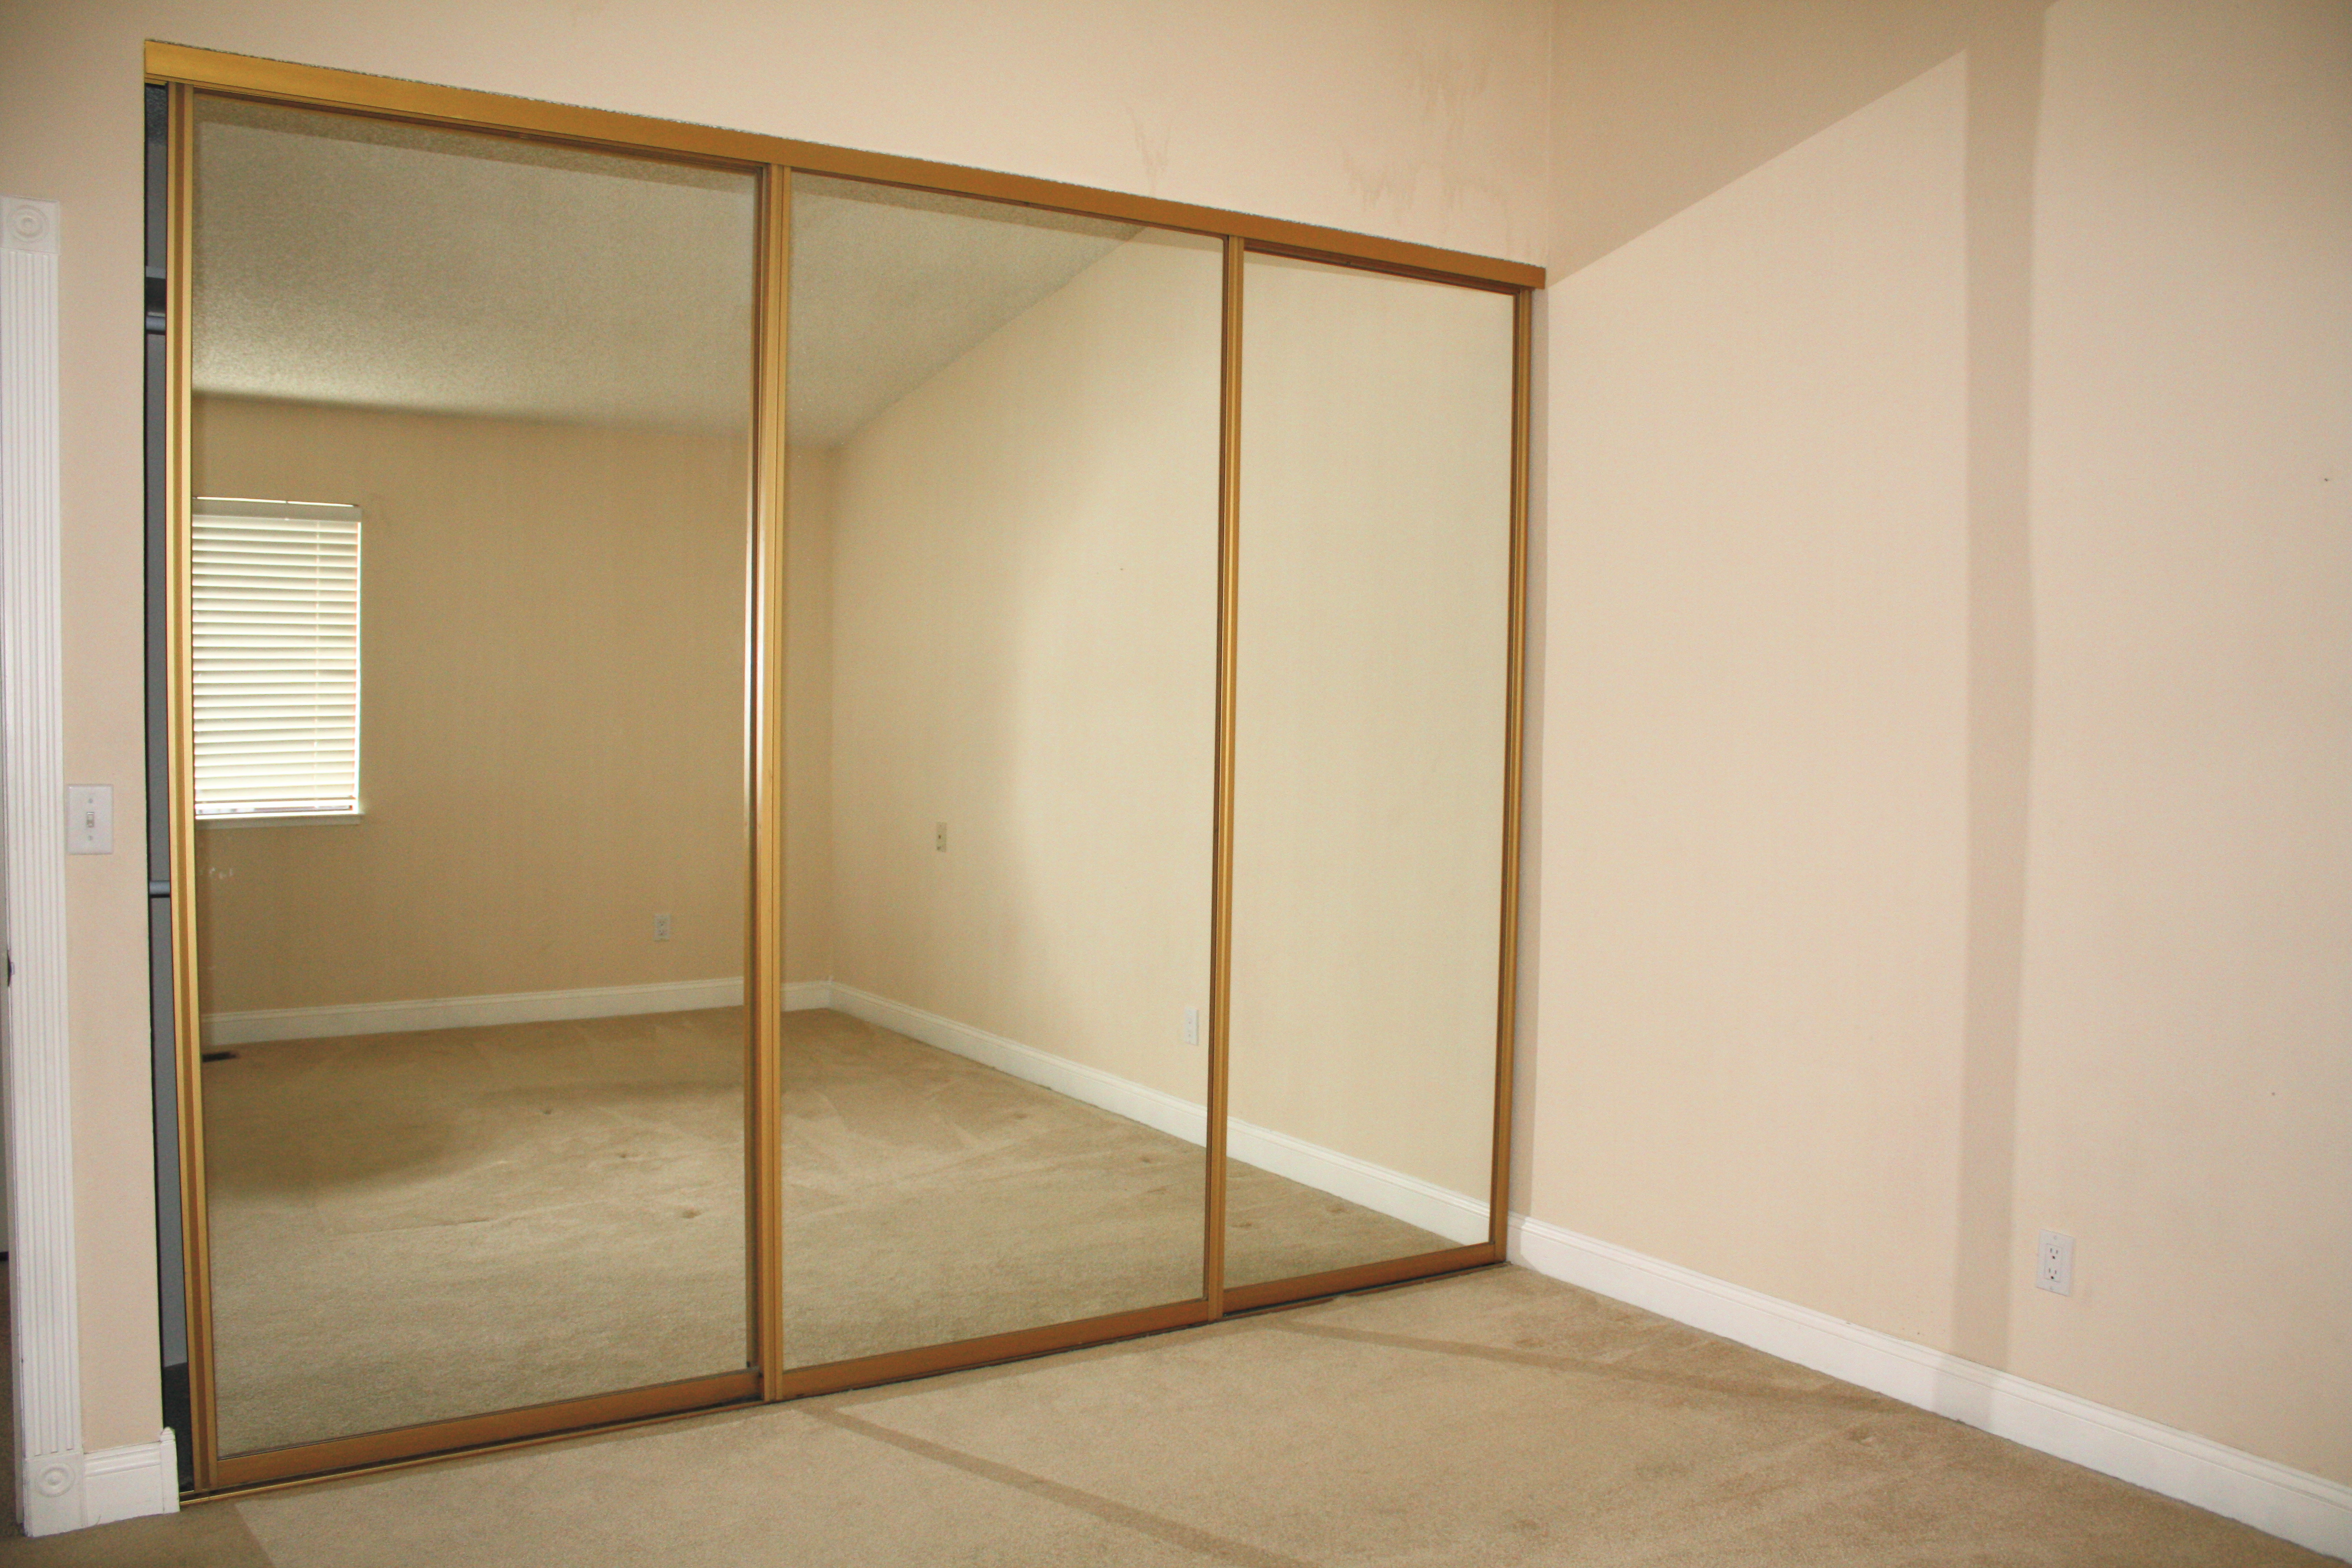 Wallpaper For Mirrored Closet Doors On, How To Install Sliding Glass Closet Doors